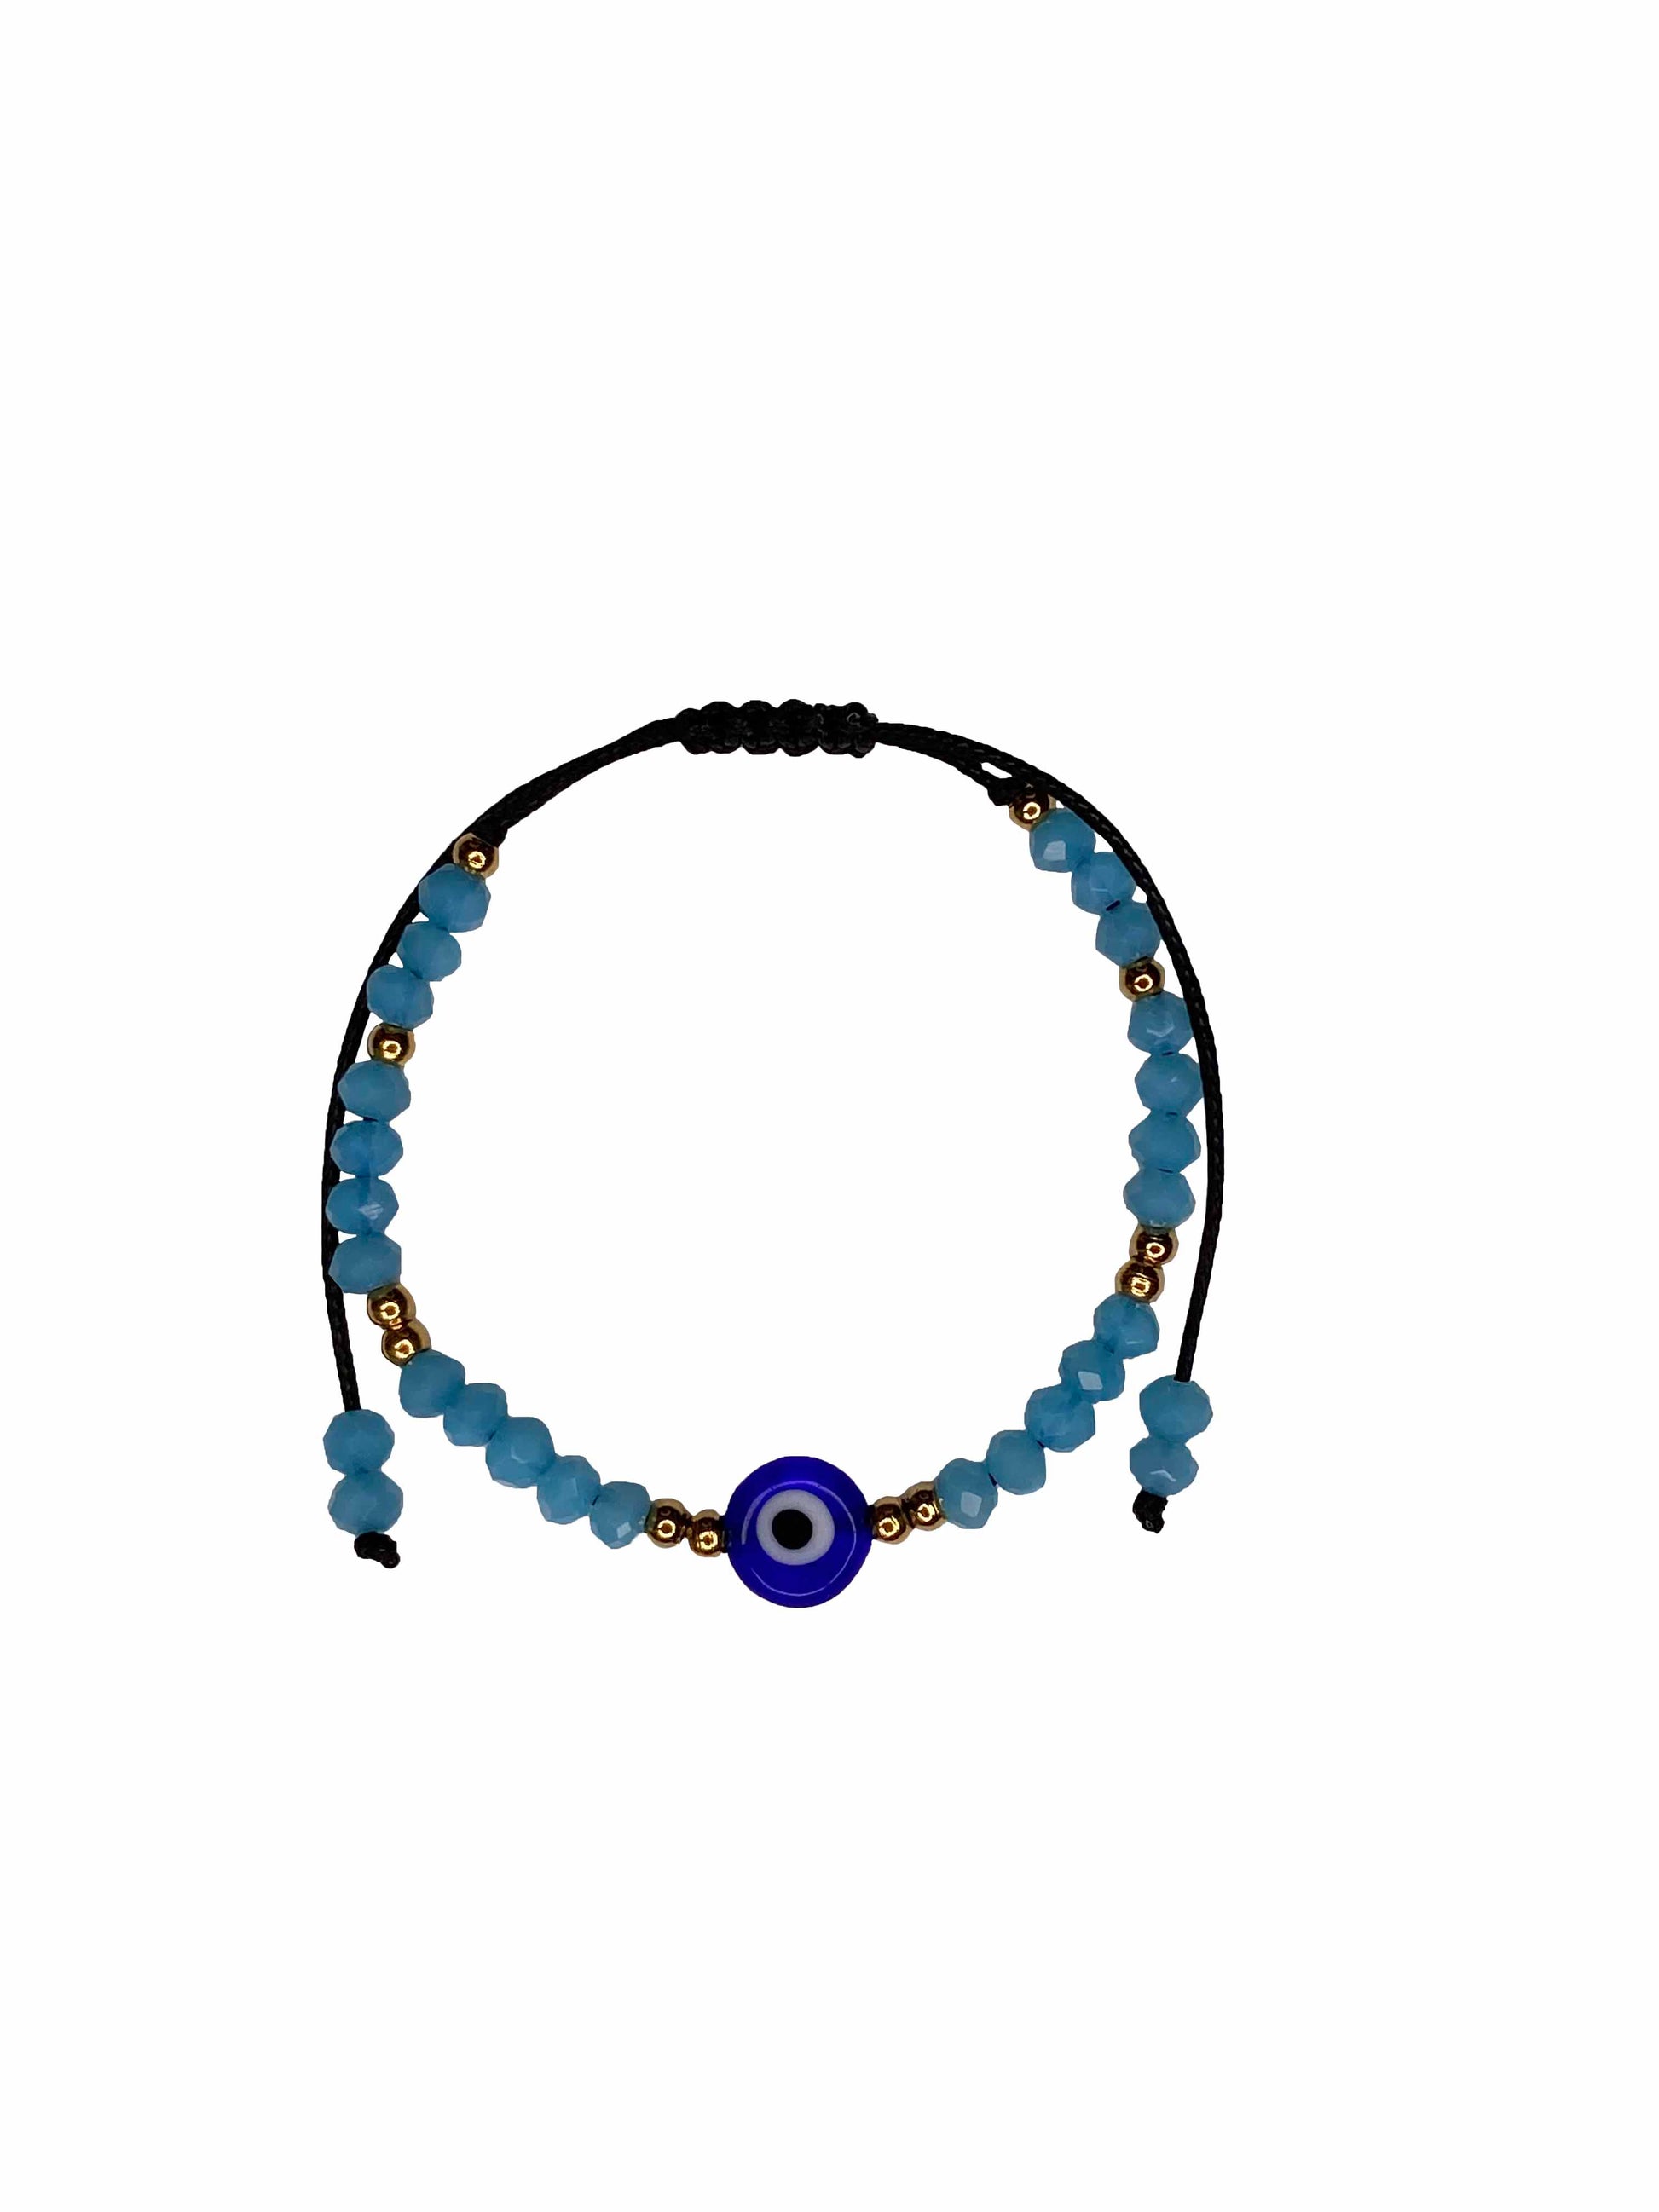 Handmade light blue crystal beaded nazar amulet bracelet with sliding knot ties. 